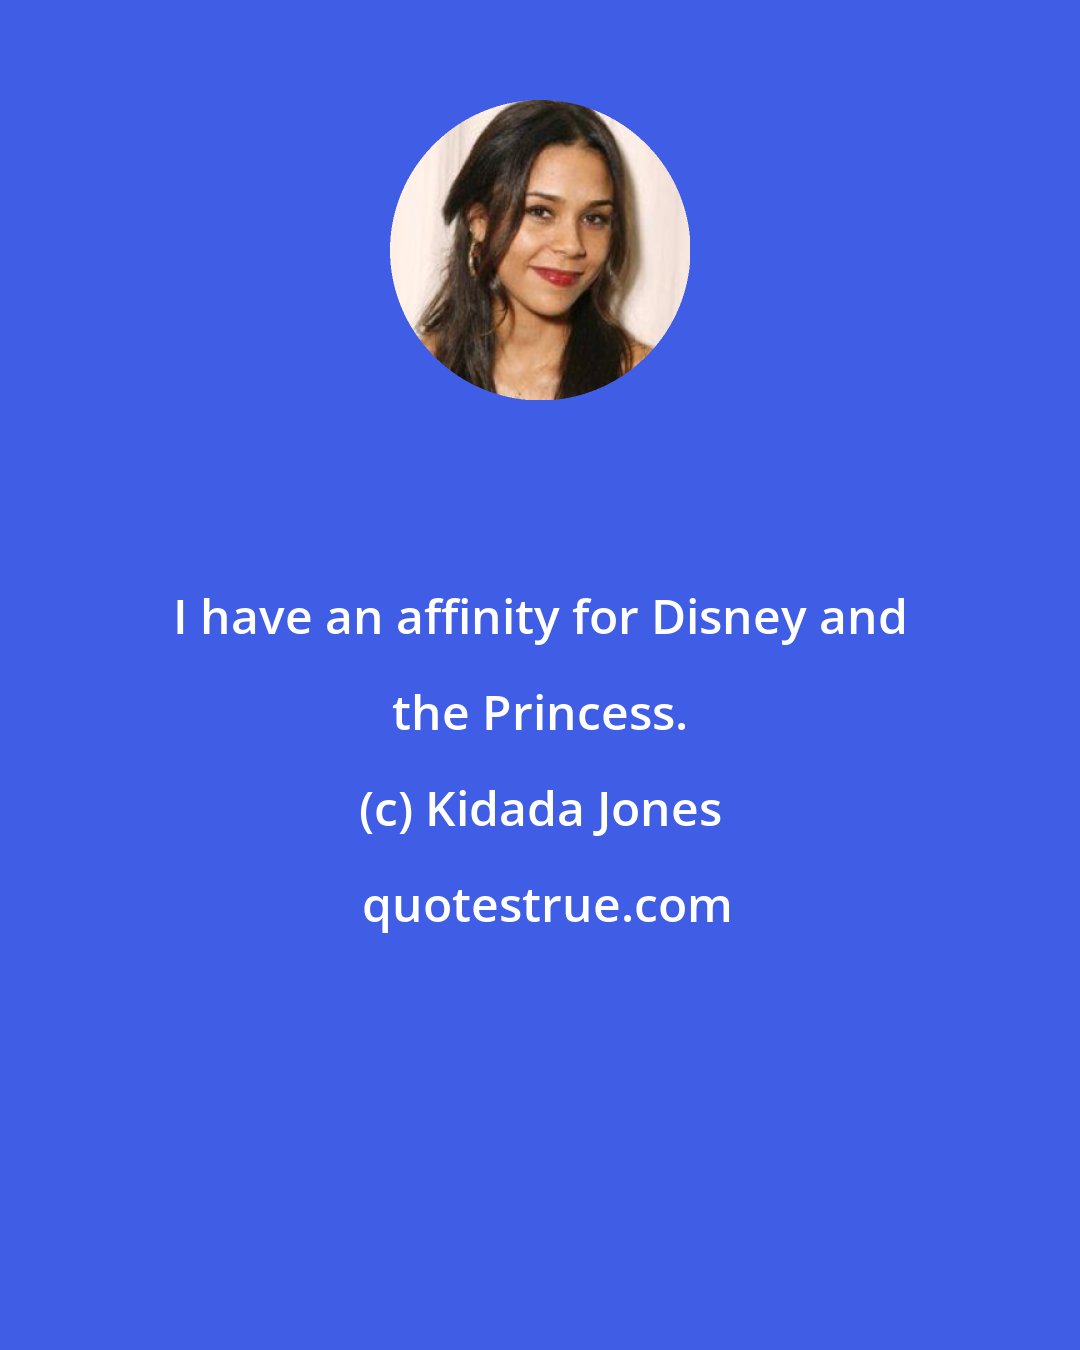 Kidada Jones: I have an affinity for Disney and the Princess.